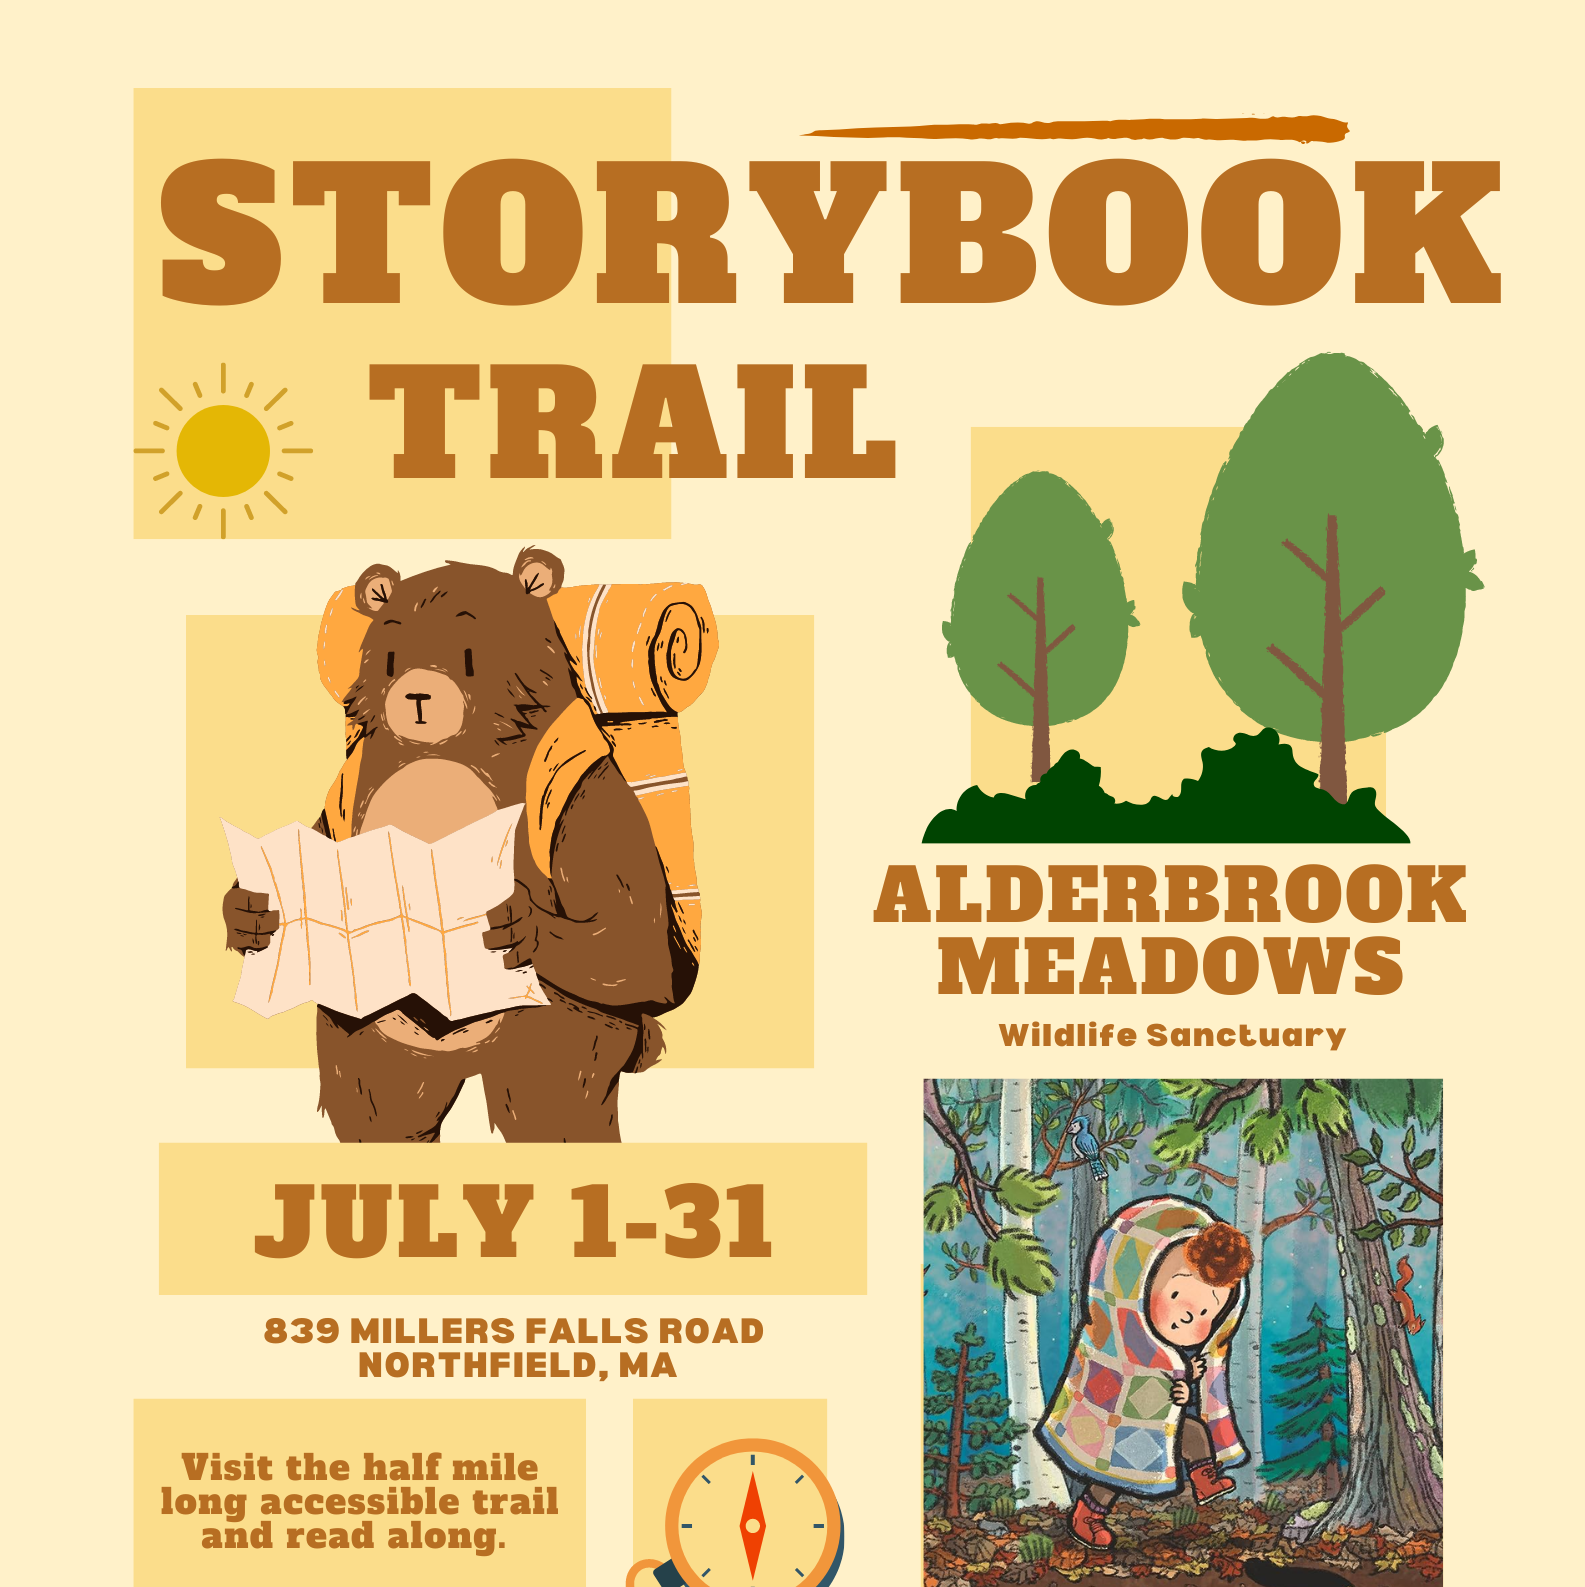 Storybook Trail at Alderbrook Meadows